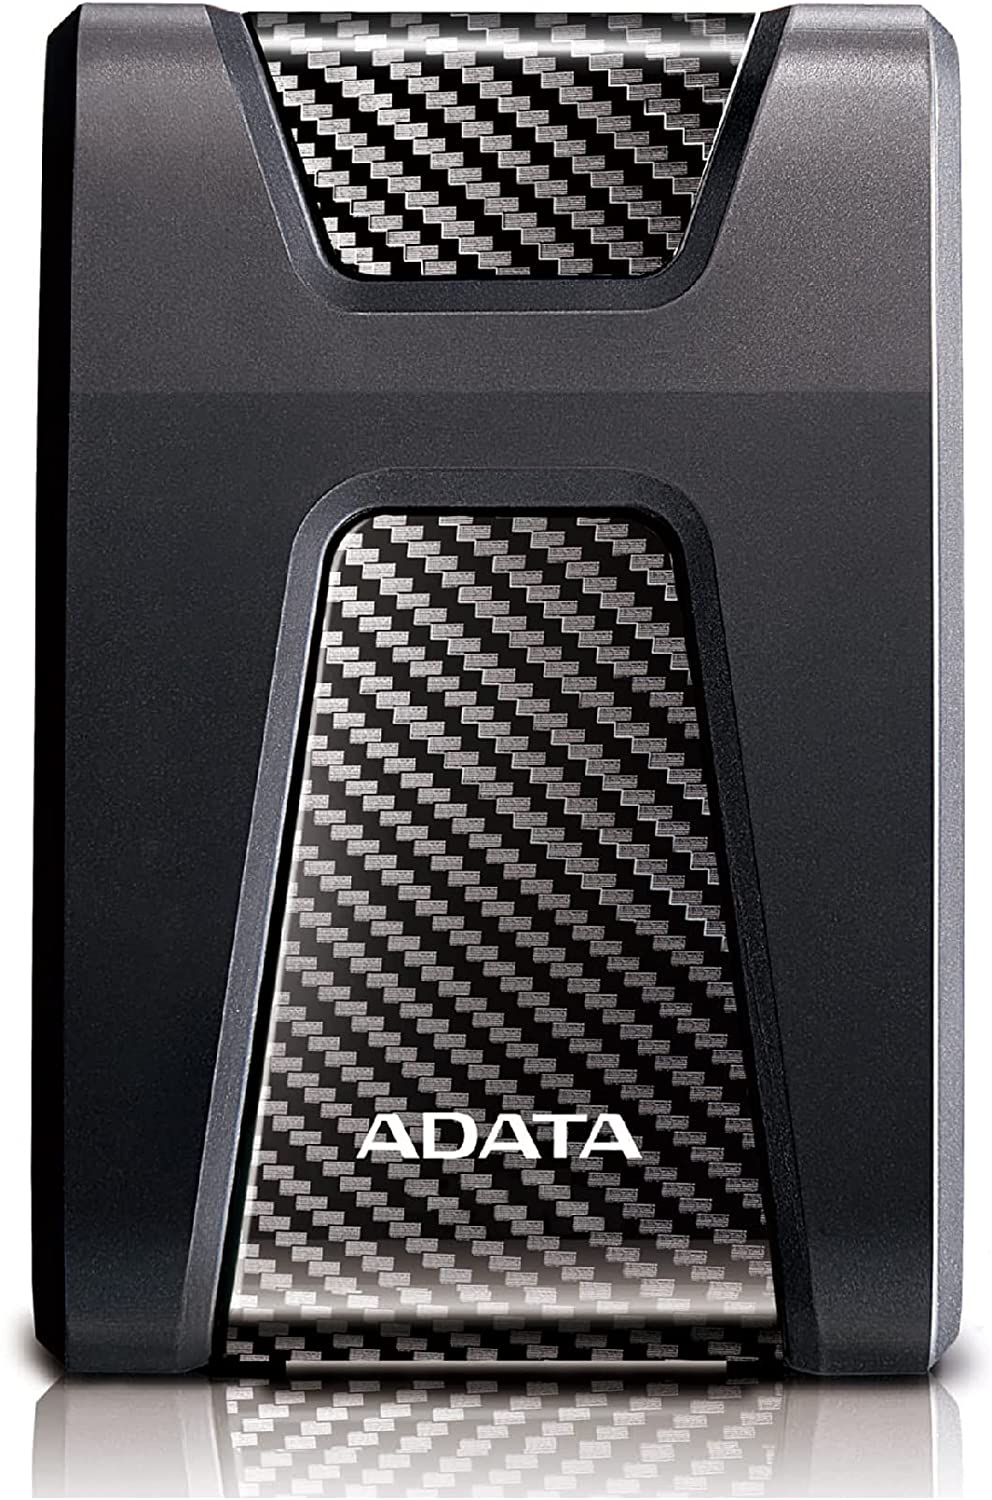 Promise technology ADATA USA DashDriv Durable HD650 1TB Anti-Shock Portable External Hard Drive - Black (AHD650-1TU3-CBK) 1TB Black